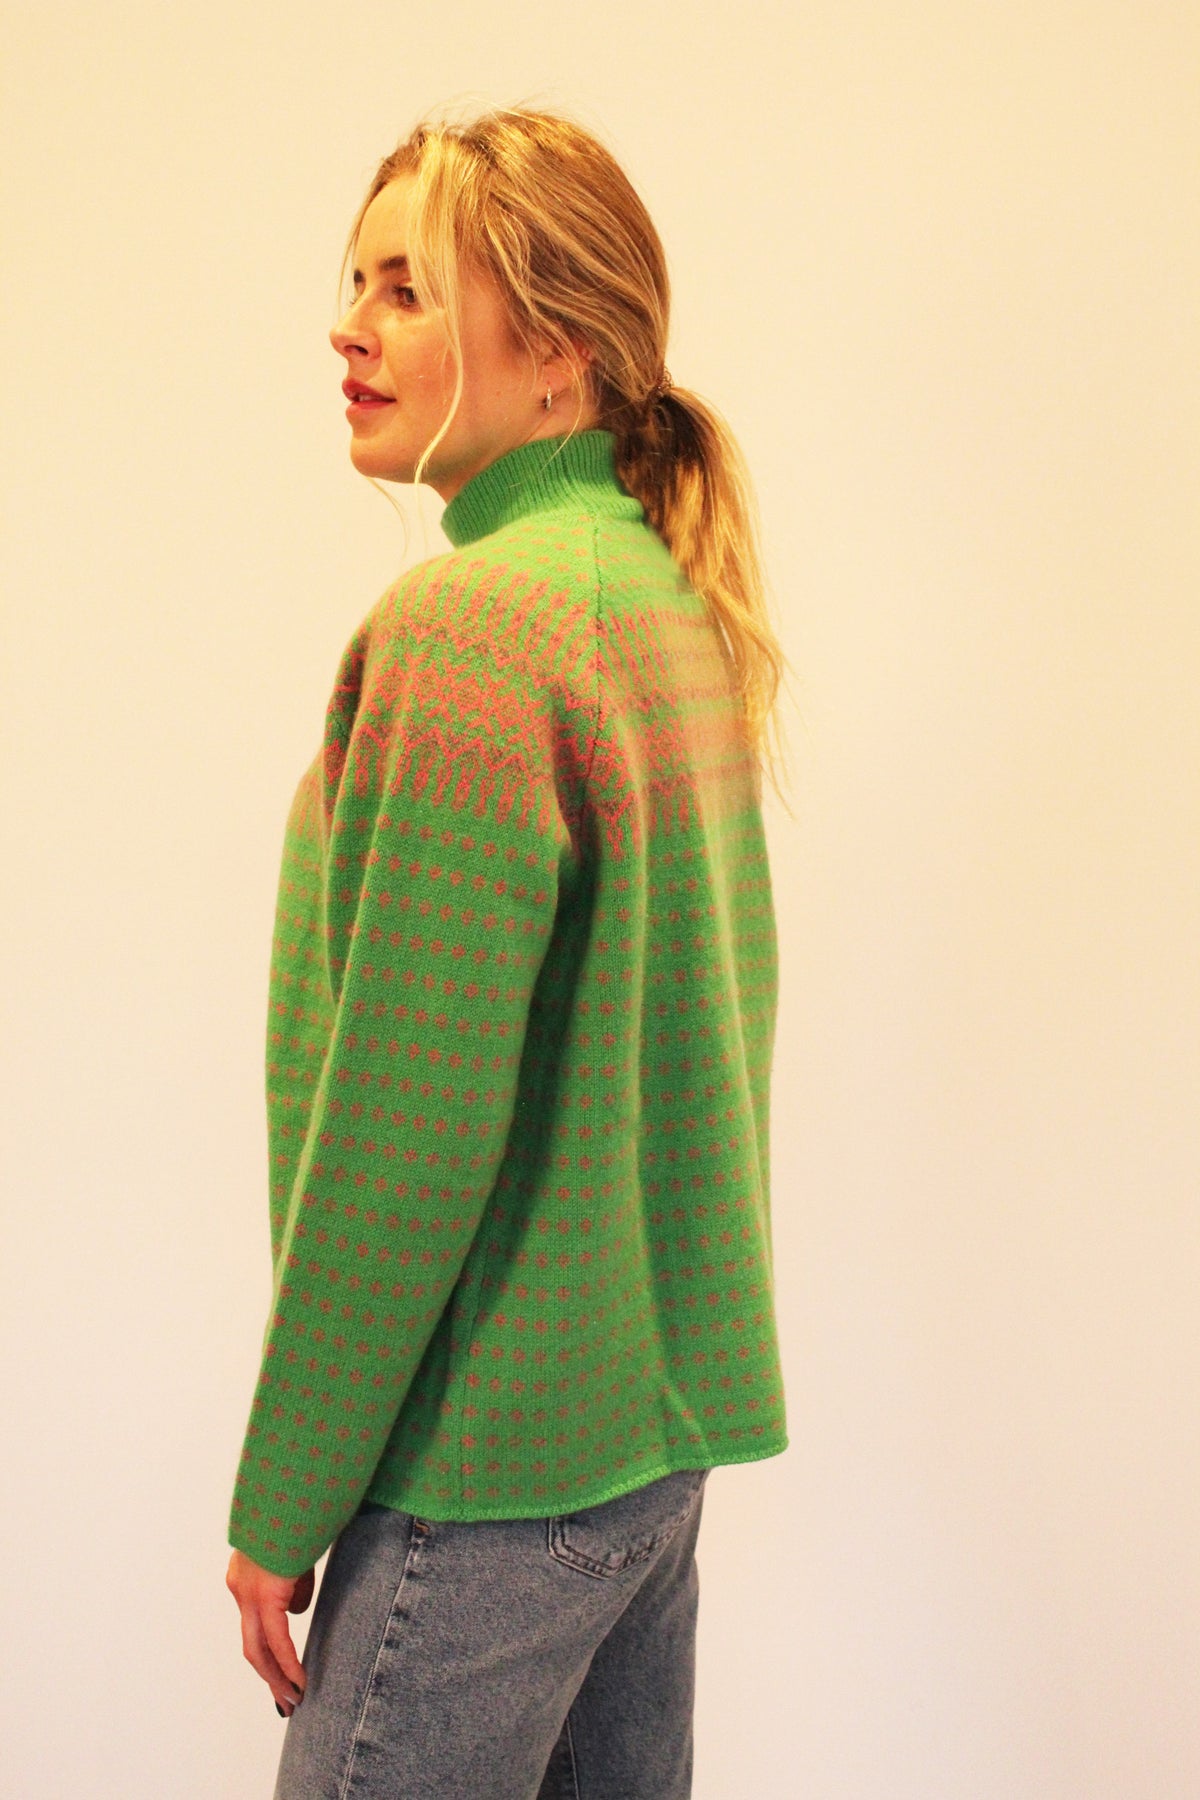 JU Nordic Winter Sweater in Bright Green & Grey